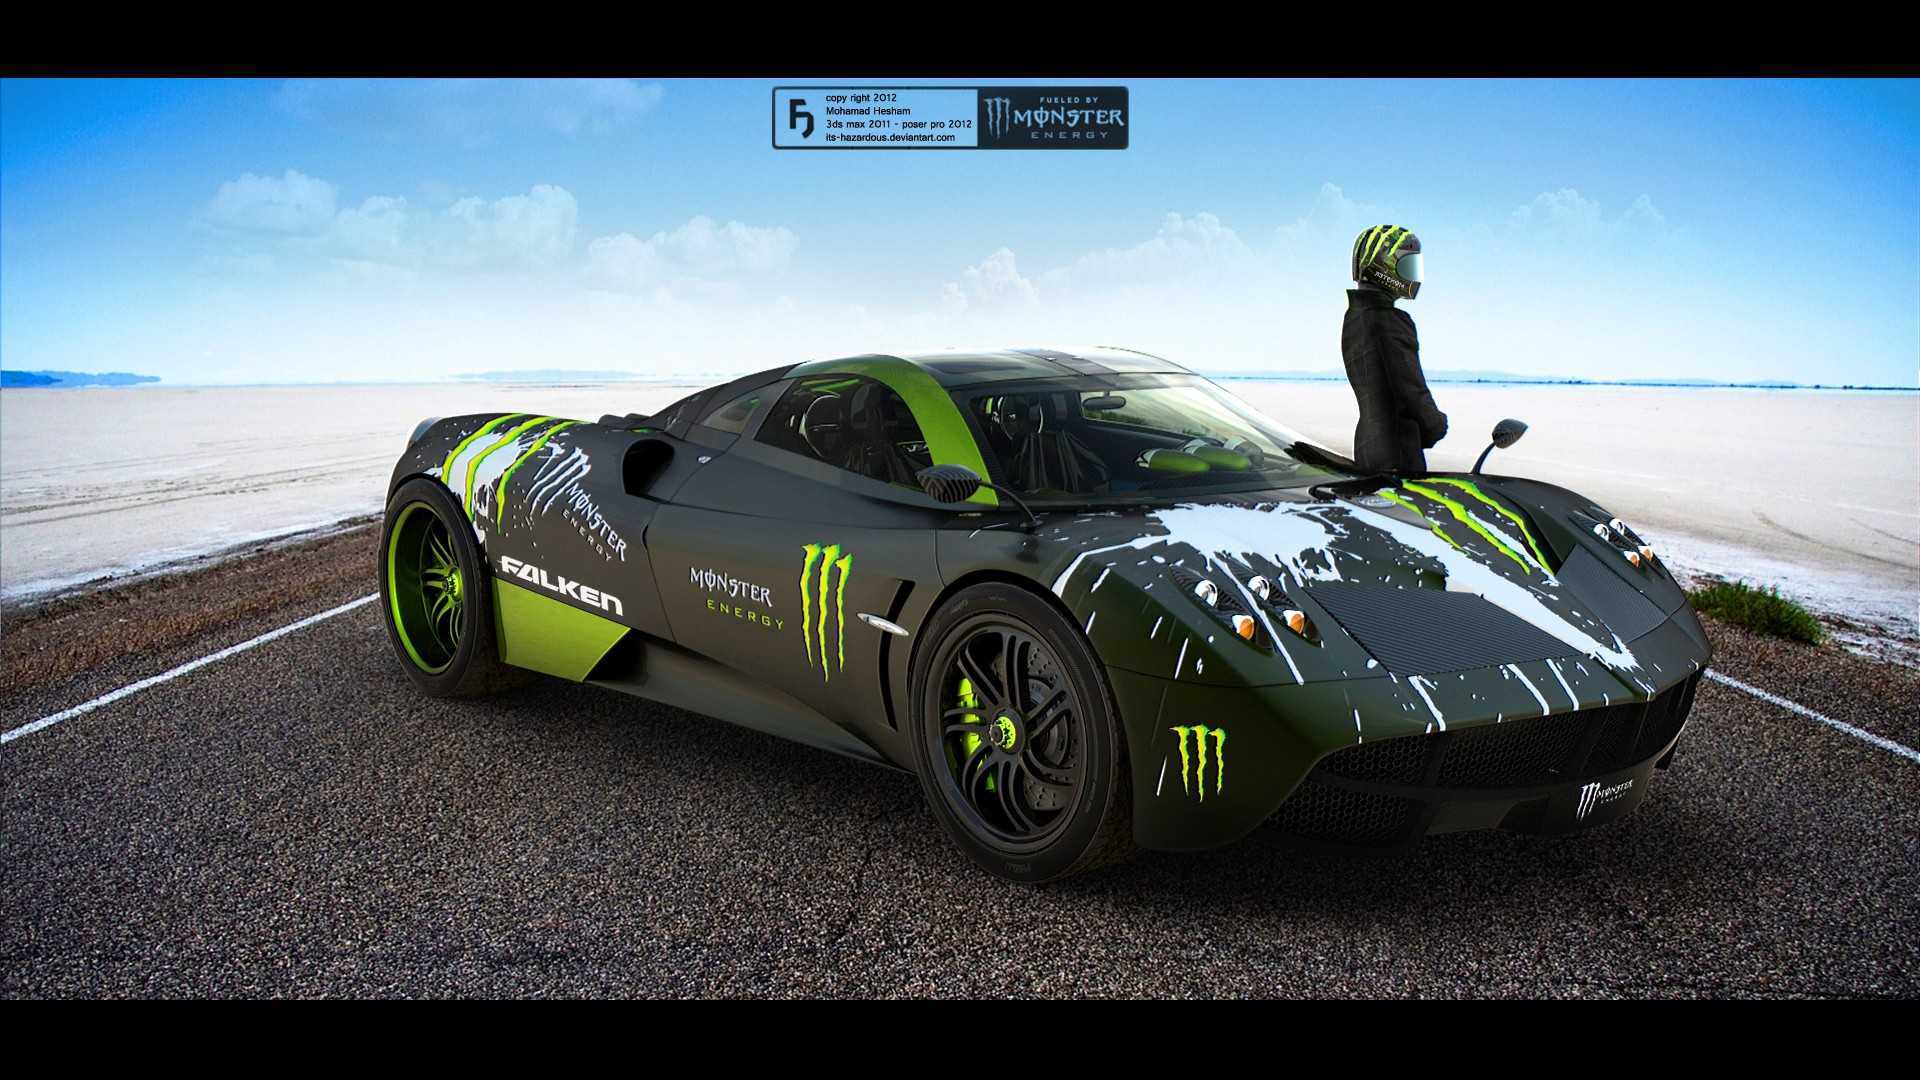 Monster Energy Wallpaper Car Widescreen HD For Mobile Phones Image